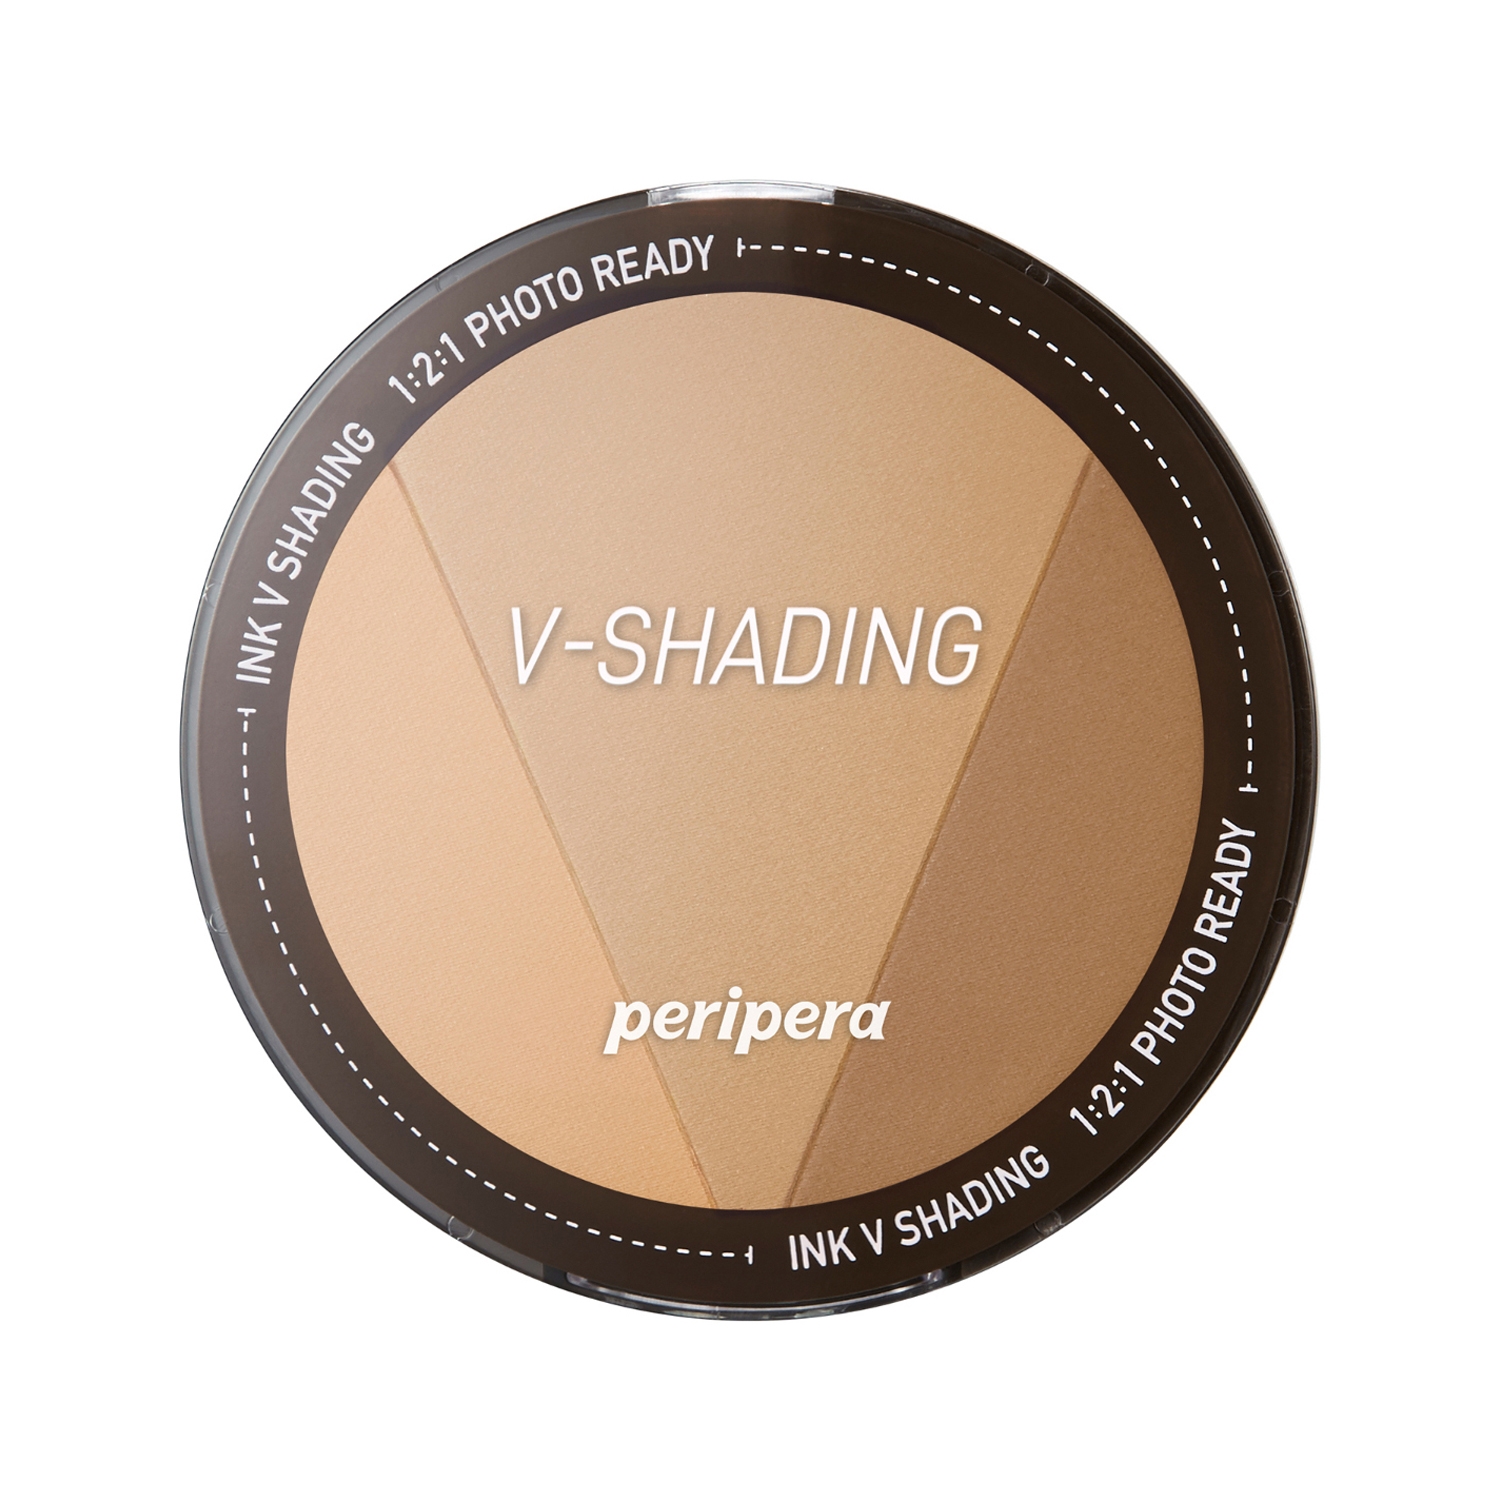 Peripera | Peripera Ink V Shading - 01 Almond Brown (9.5g)